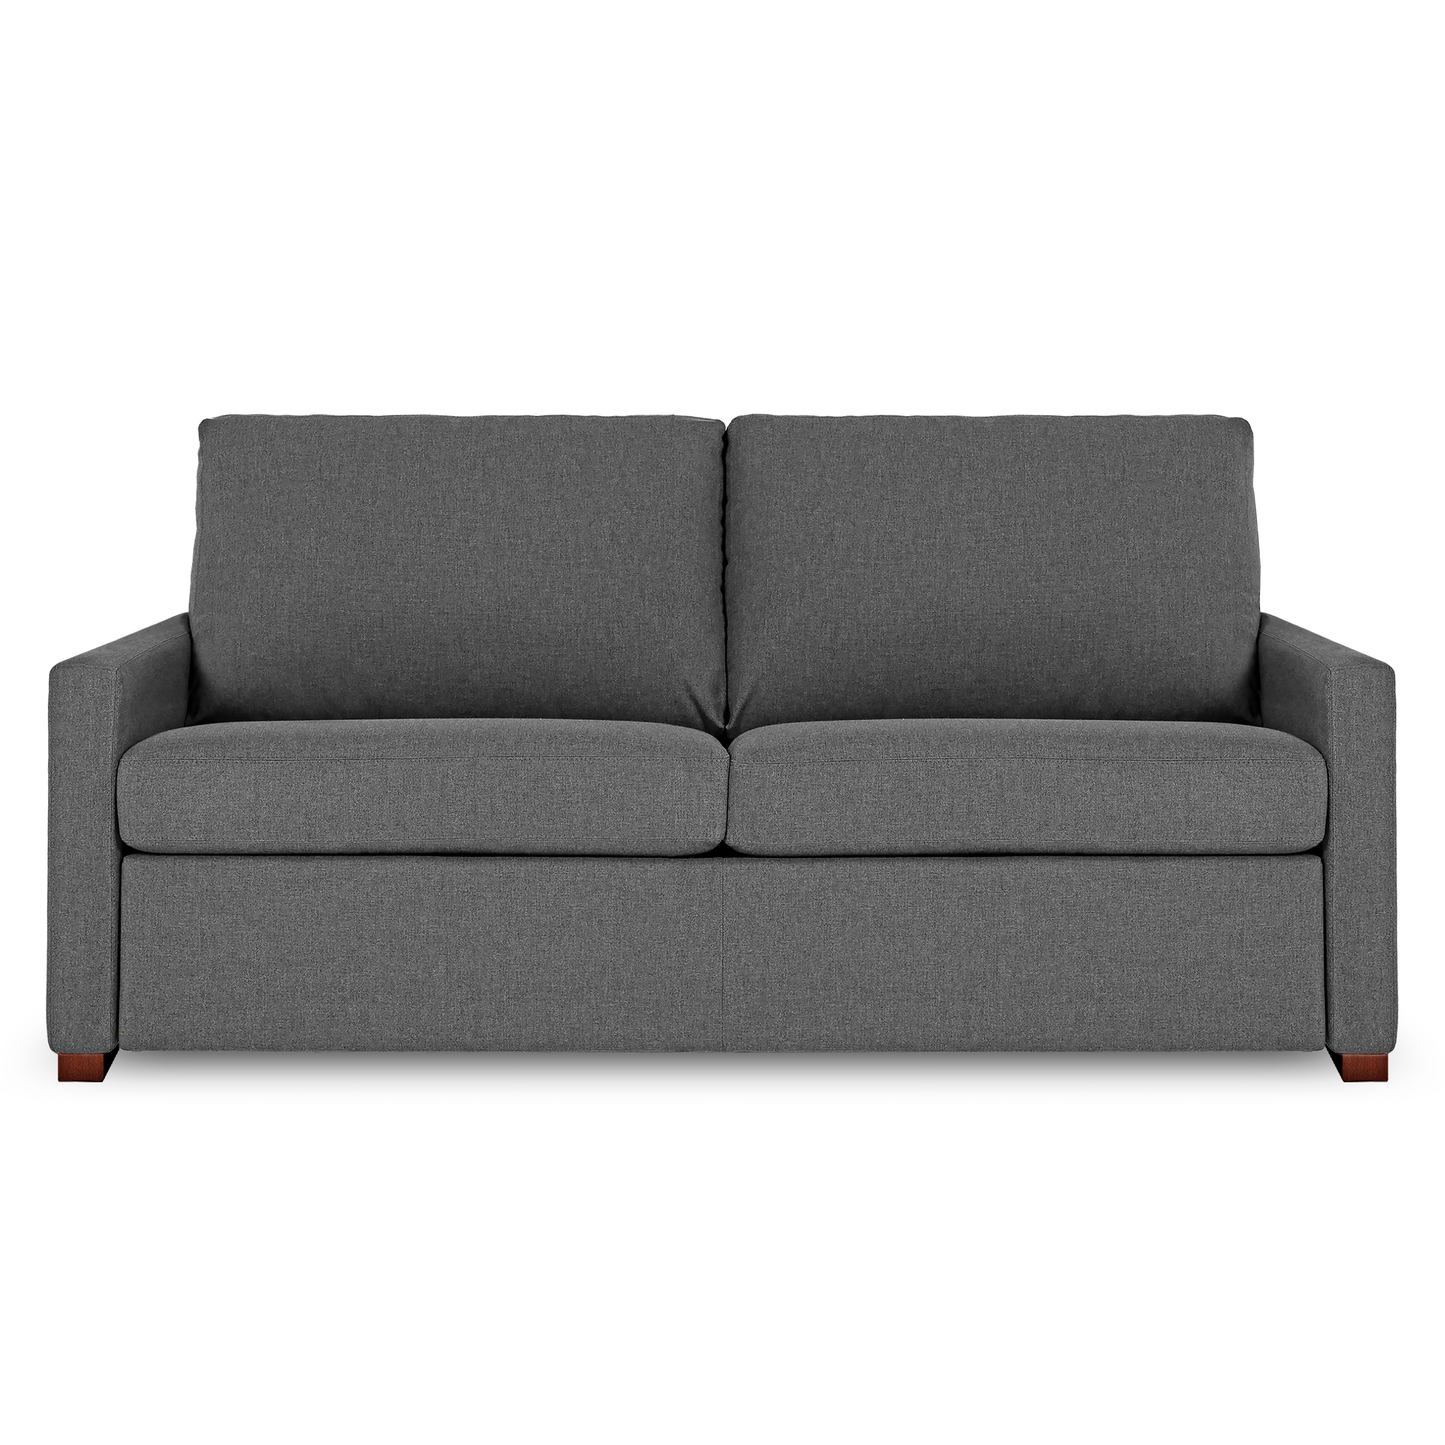 American Leather Comfort Sleeper - Pearson - Best Sofa Sleeper